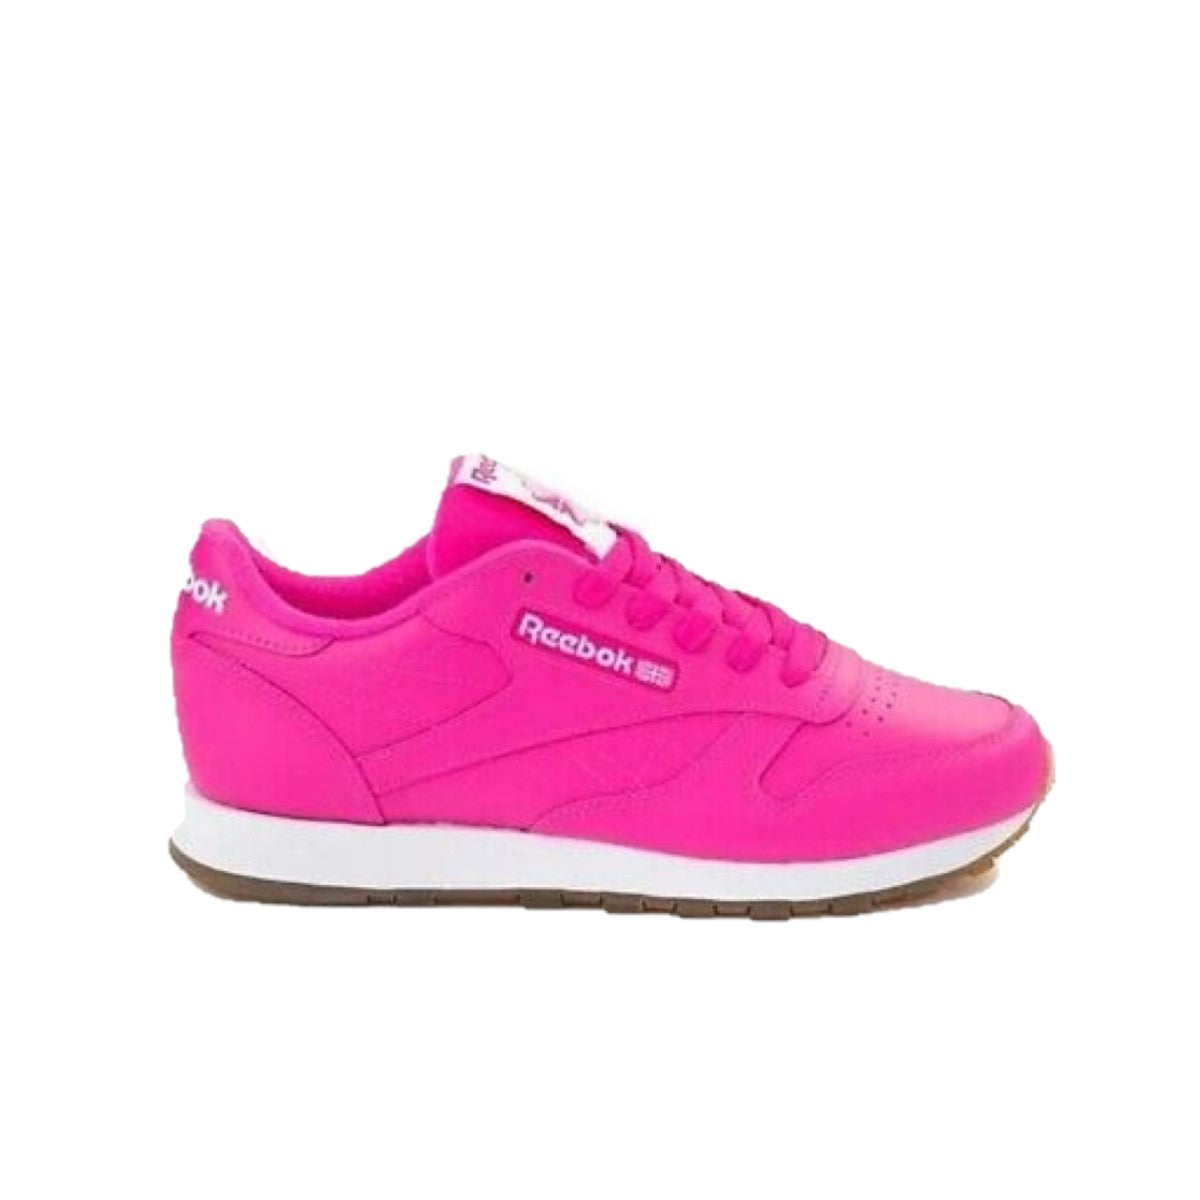 REEBOK FW9615 CL LTHR WMN'S (Medium) Pink/White Leather Lifestyle Shoes